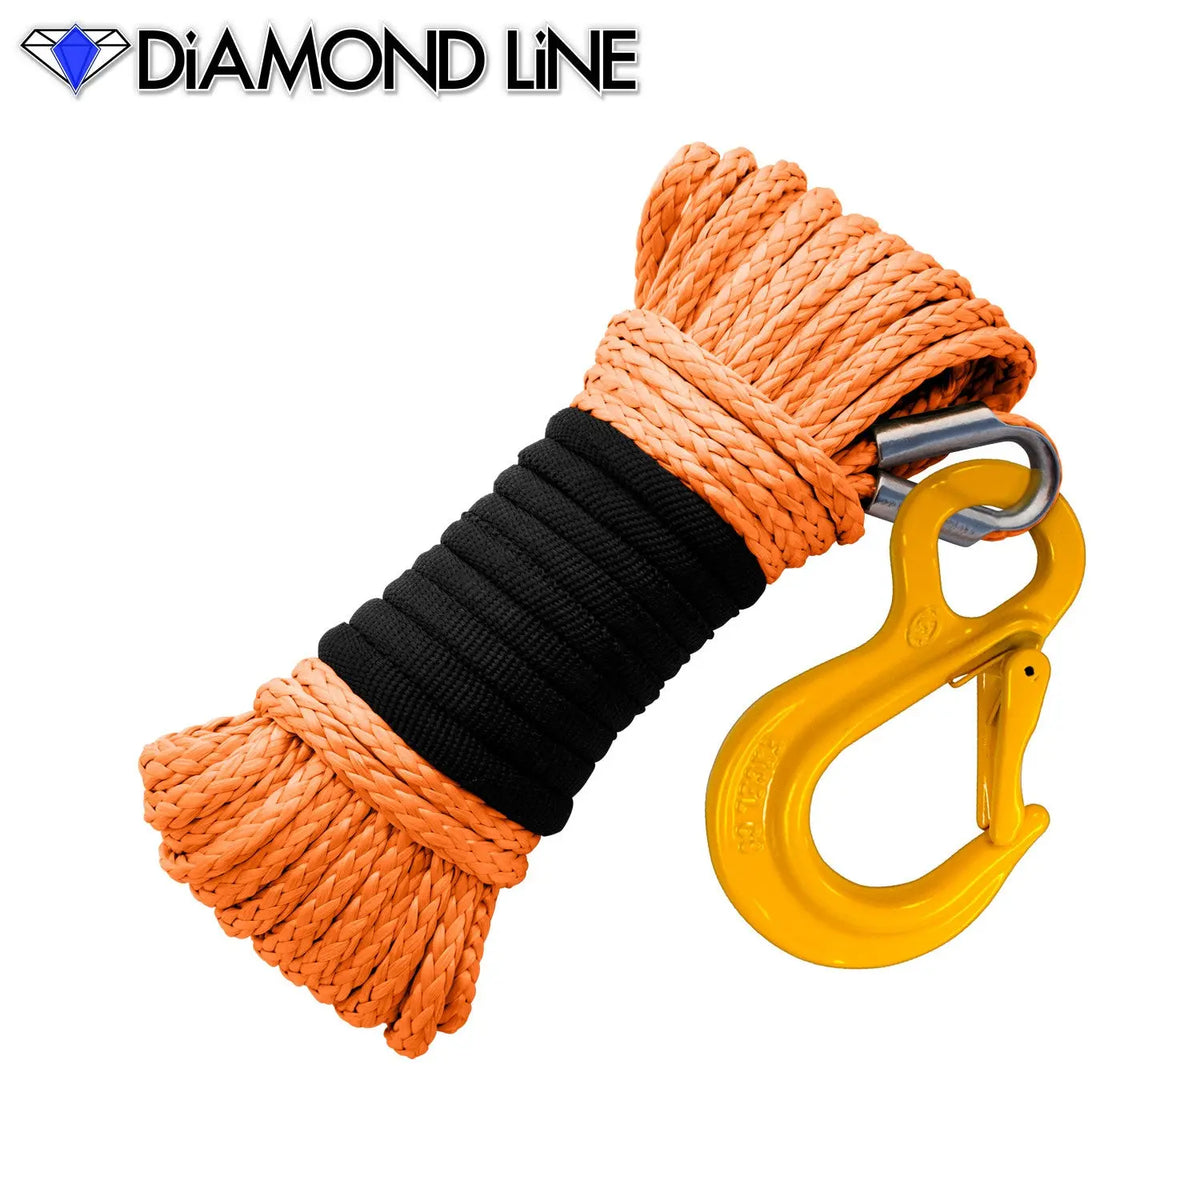 3/16" x 50' Diamond Line Winch Rope Mainline - Orange with Hook.